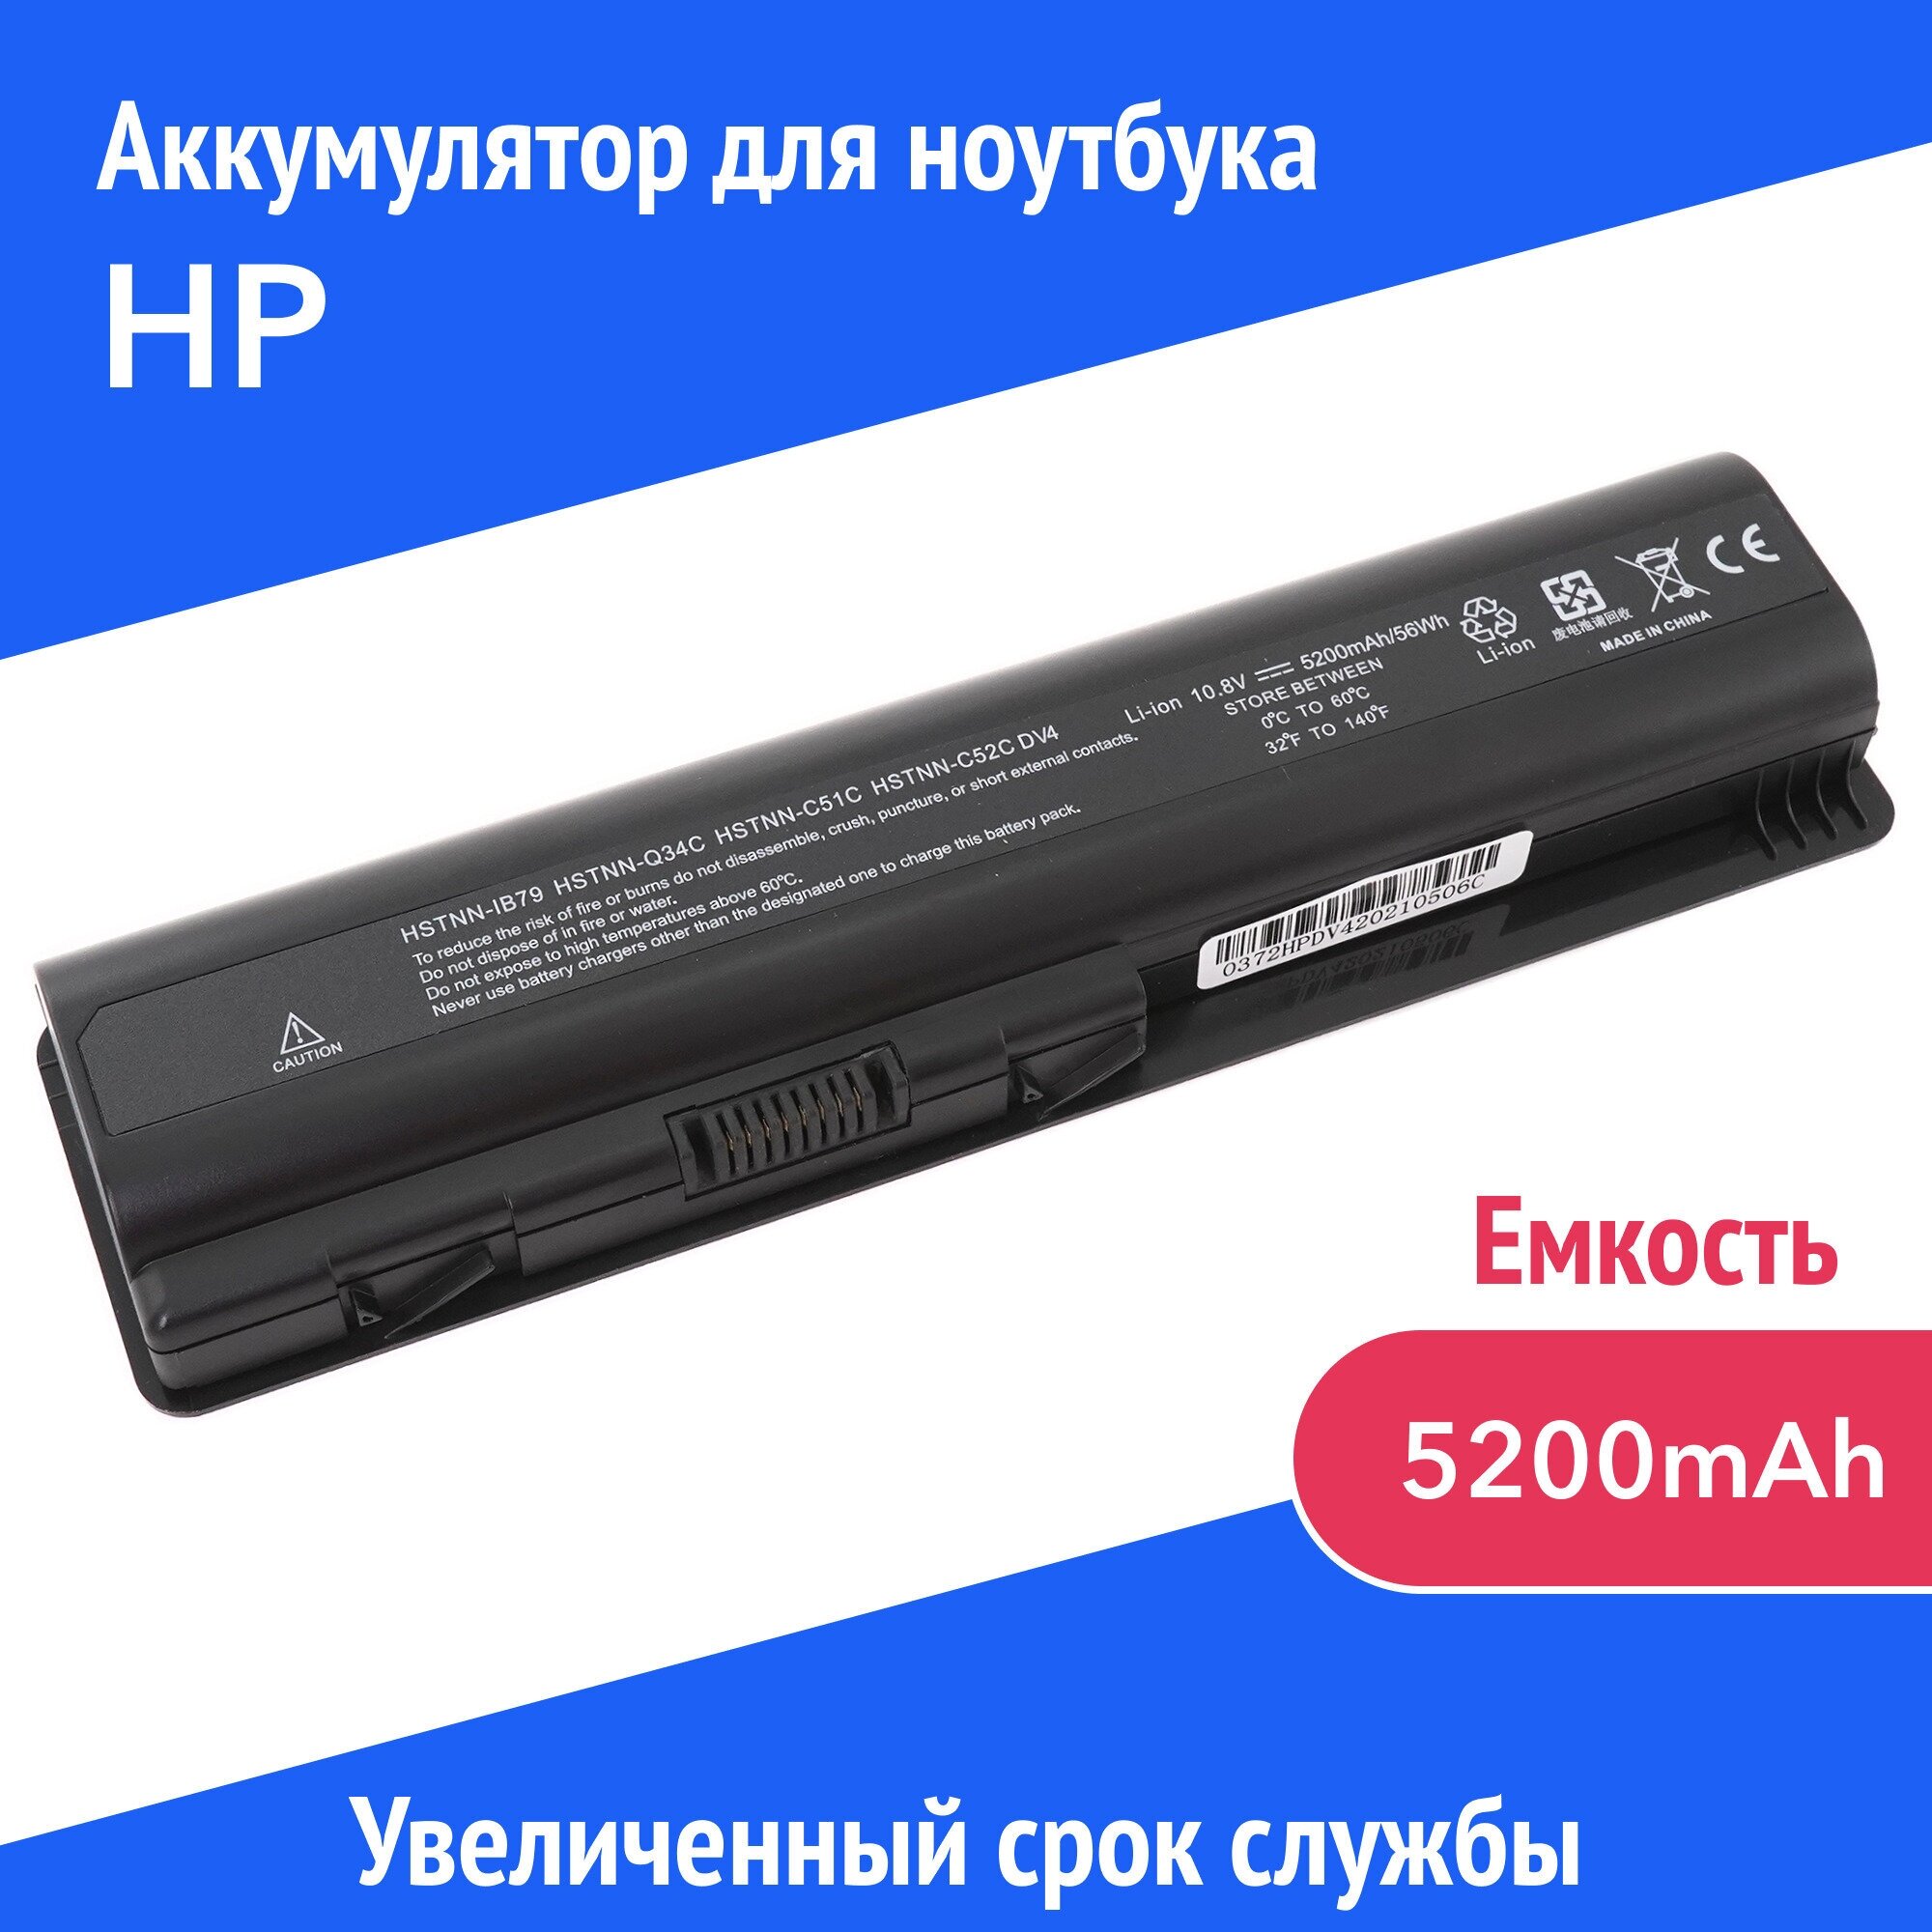 Аккумулятор HSTNN-LB72 для HP Pavilion dv4 / dv6 / G50 / G71 / Compaq Presario CQ40 / CQ61 / CQ70 (KS524AA, NH493AA, HSTNN-CB72) 5200mAh